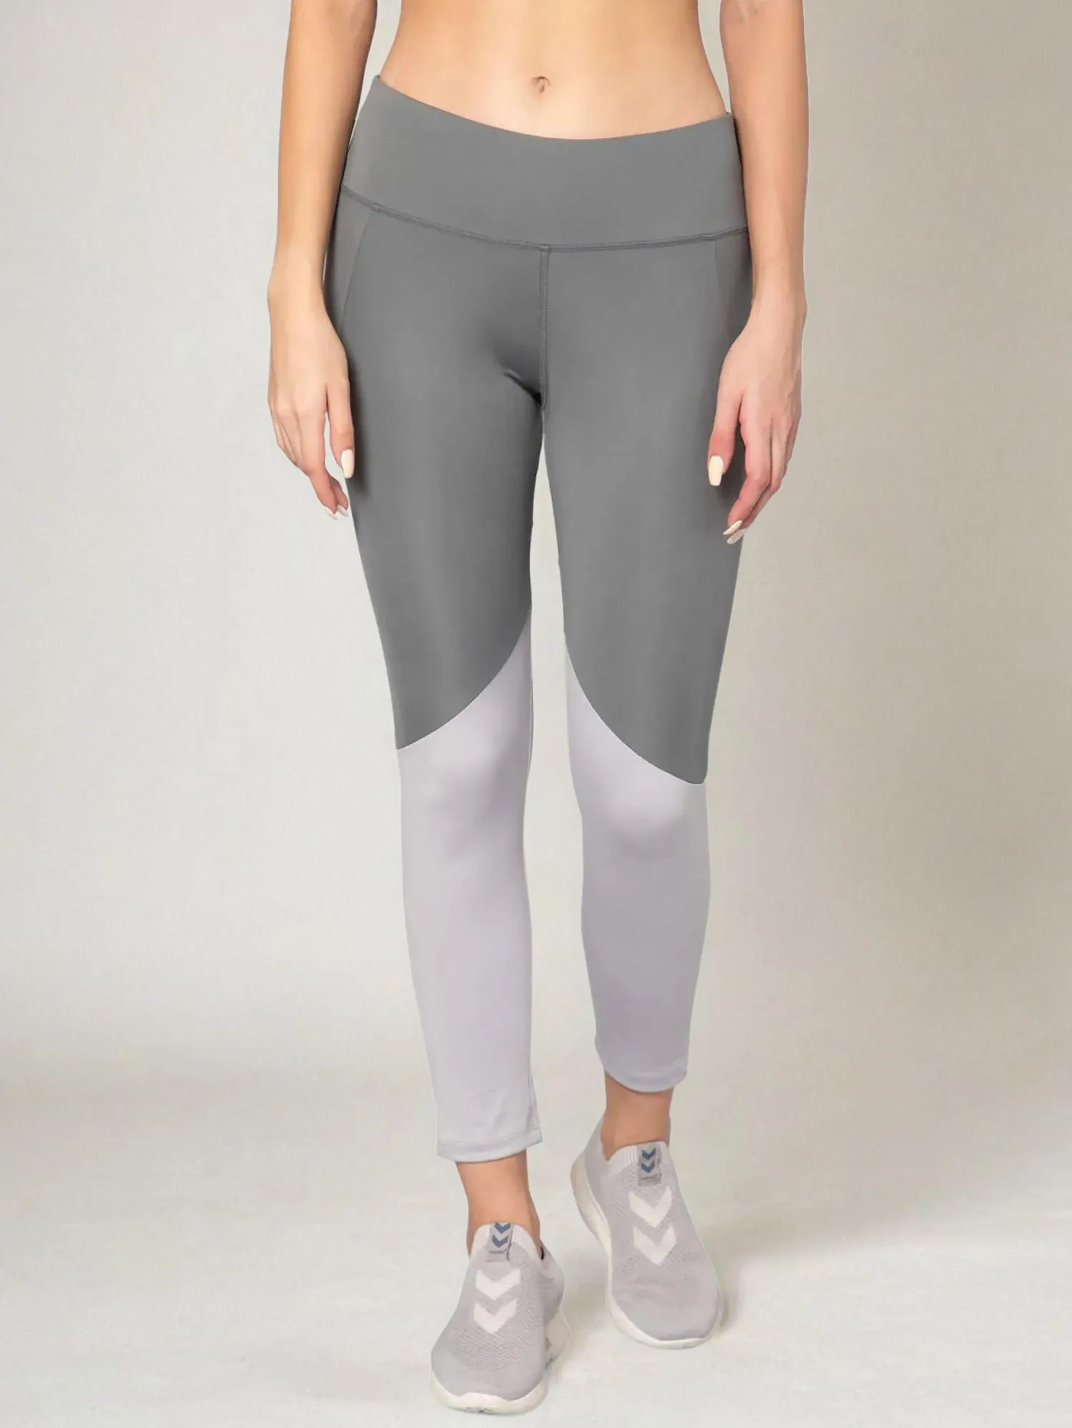 Women's Yoga Pants Pattern | Sewing Pattern for Yoga Pants – Seamingly  Smitten